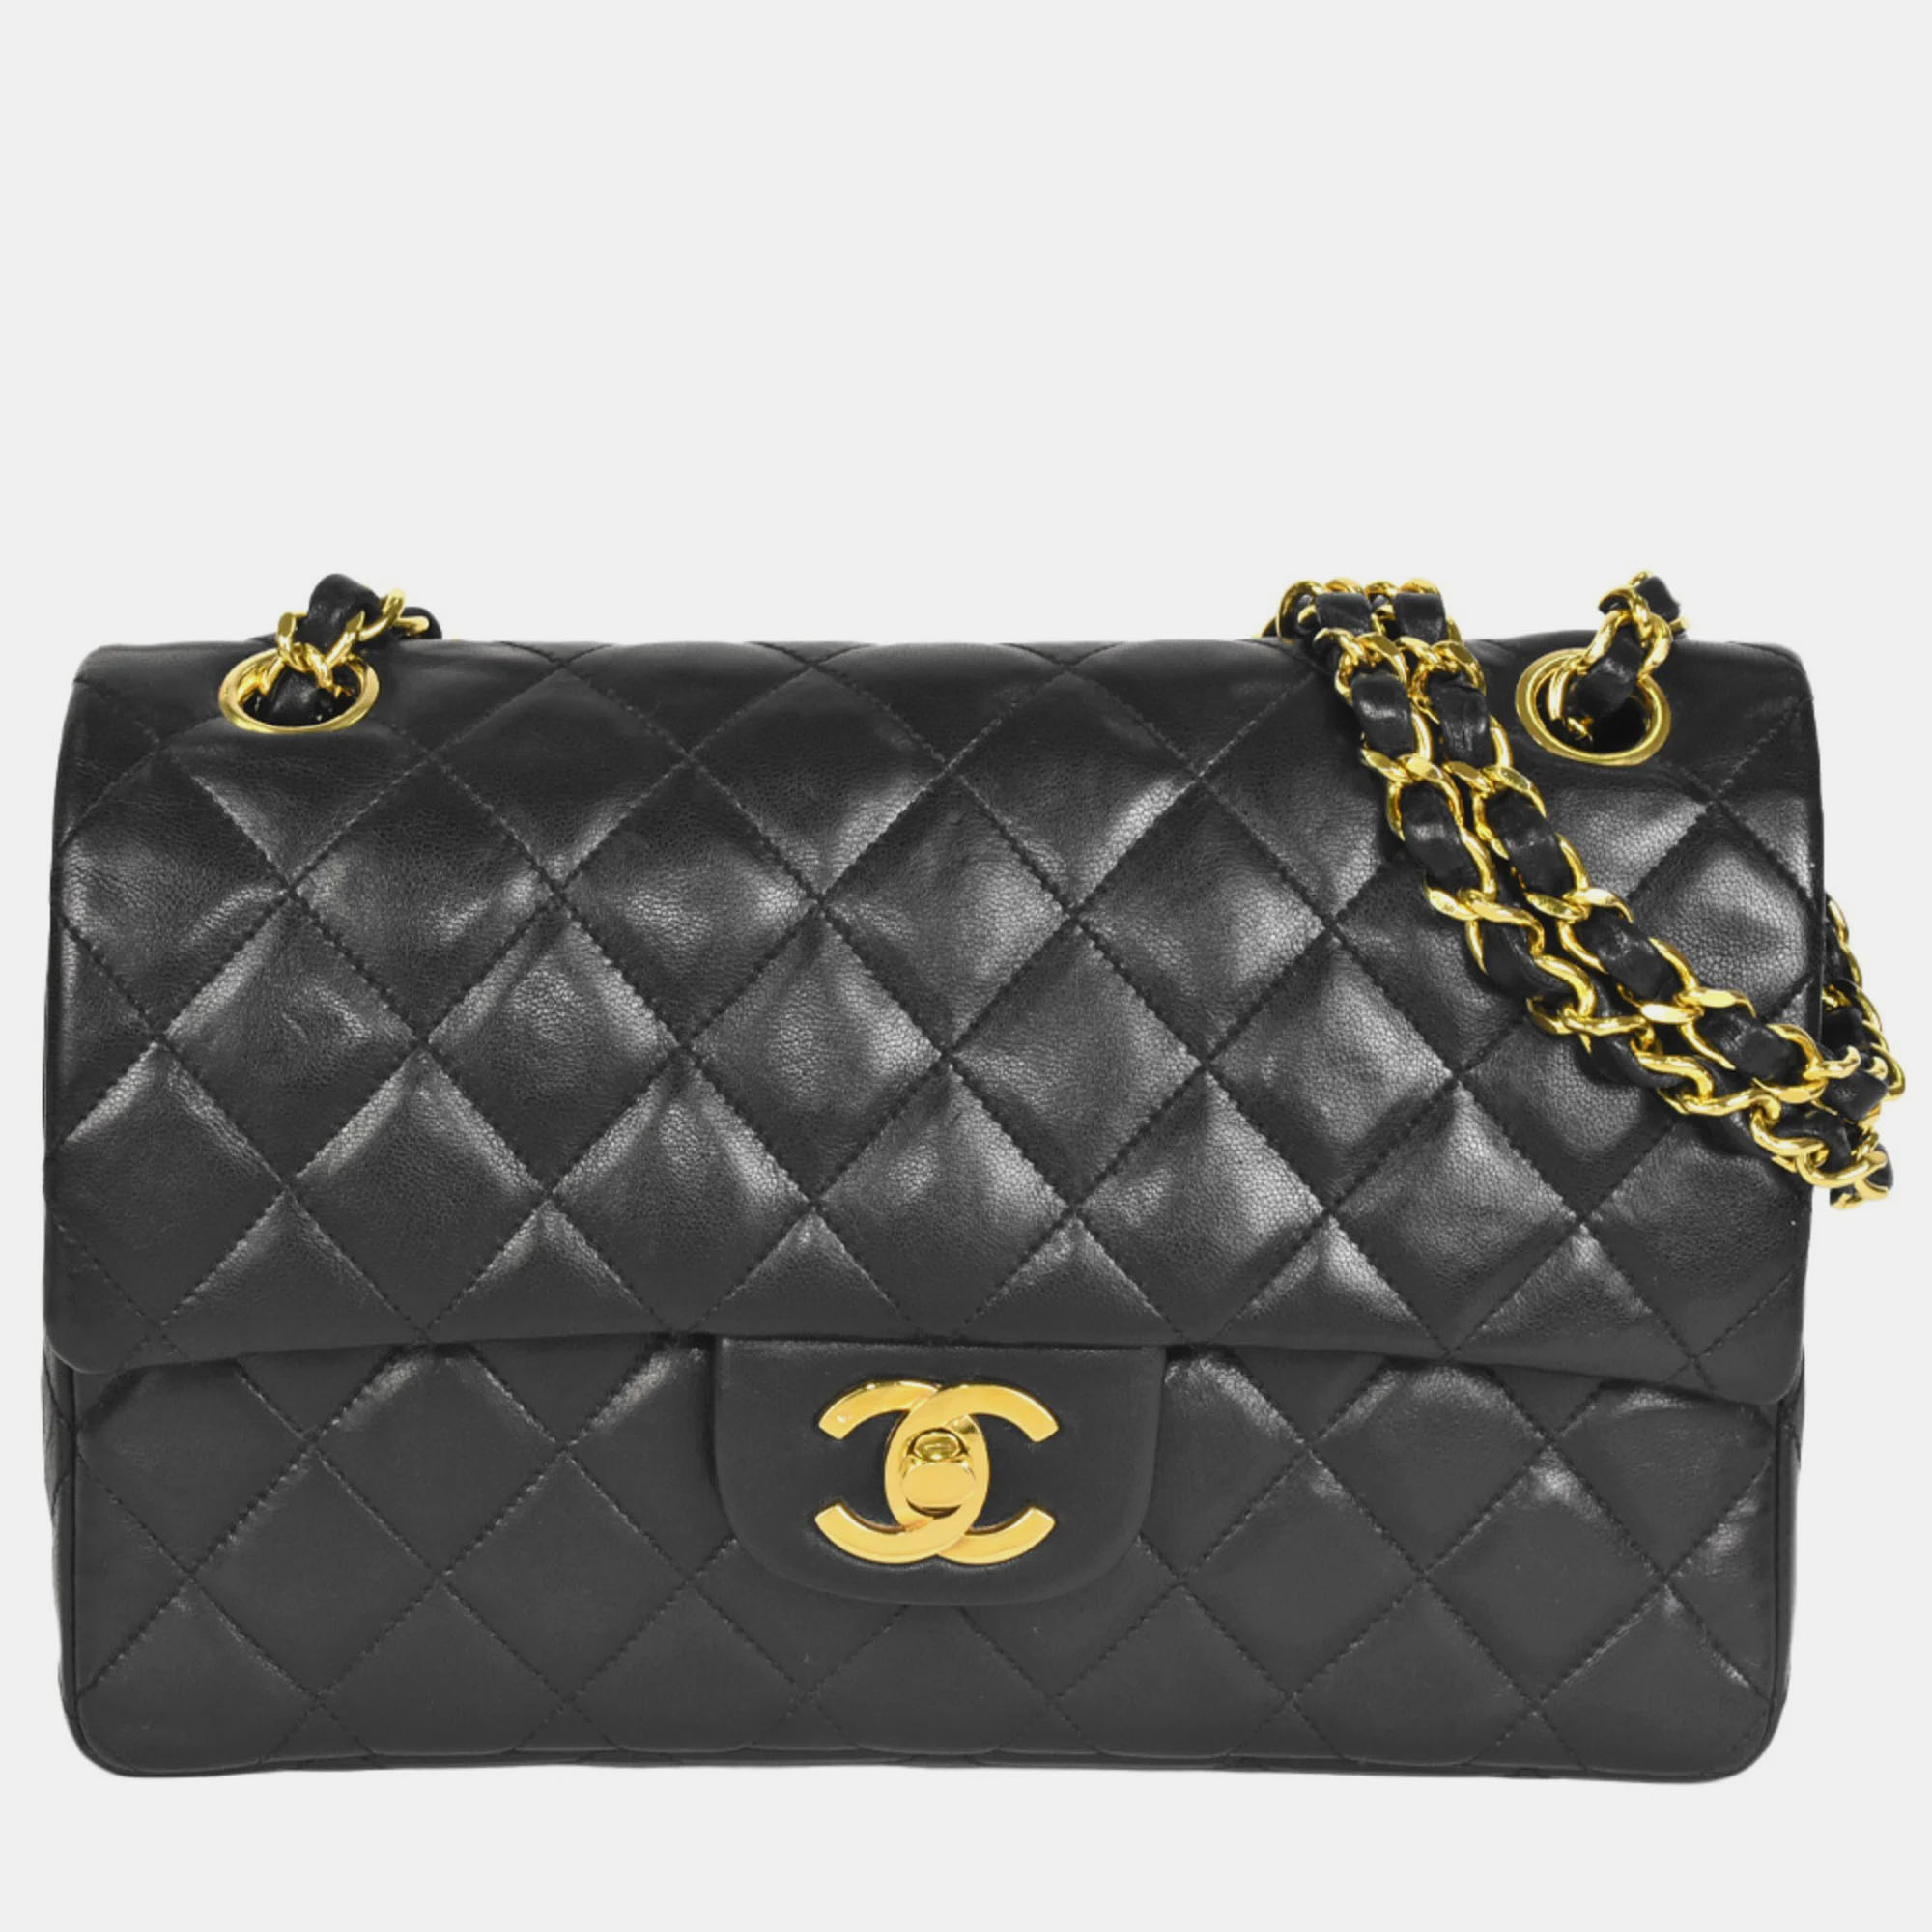 Chanel vintage black lambskin small classic flap bag